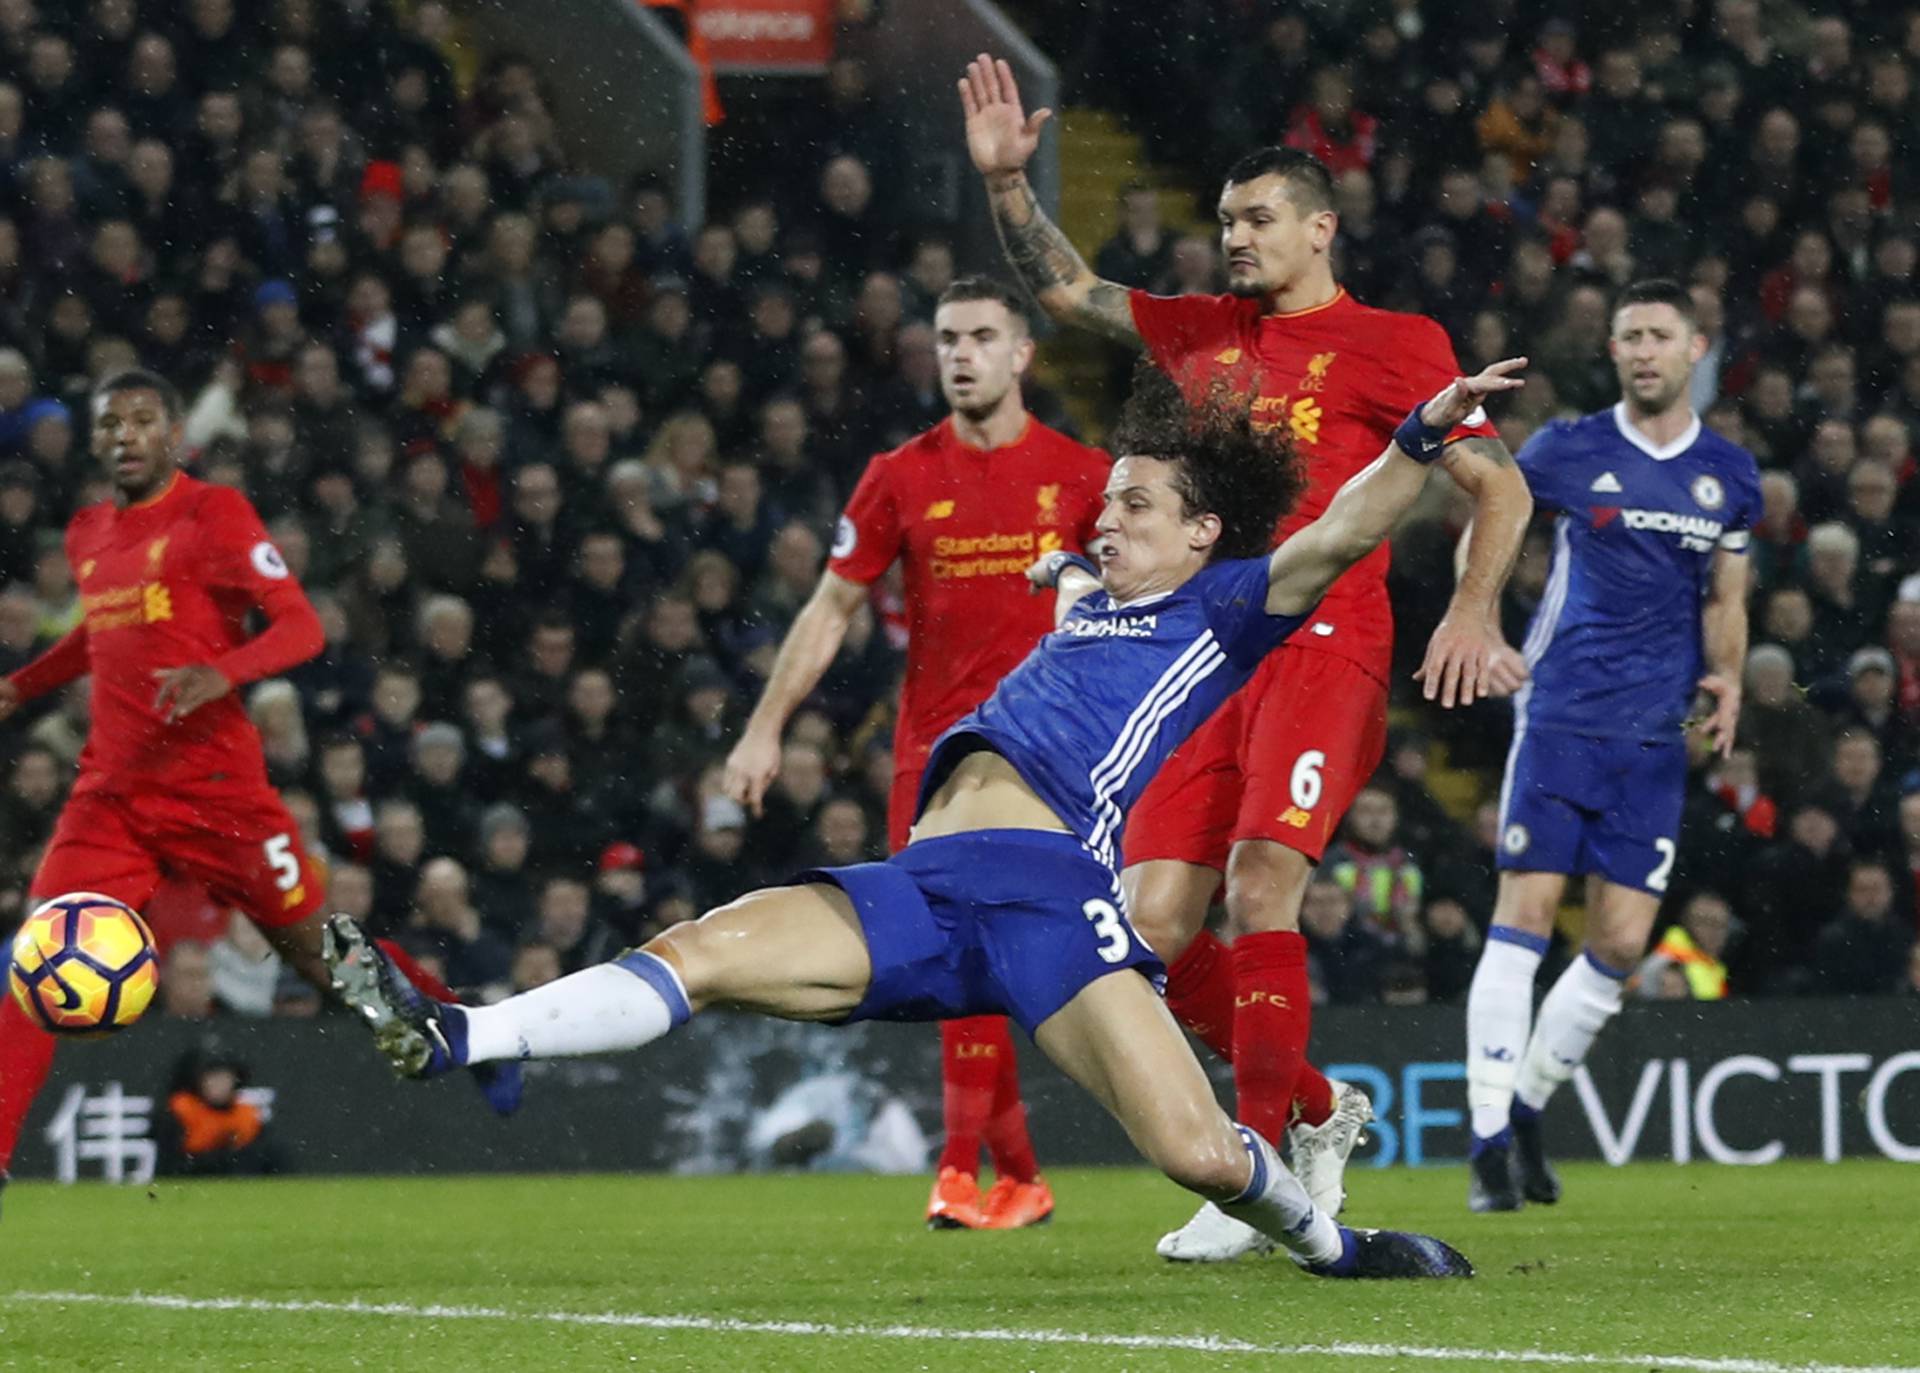 Chelsea's David Luiz shoots at goal